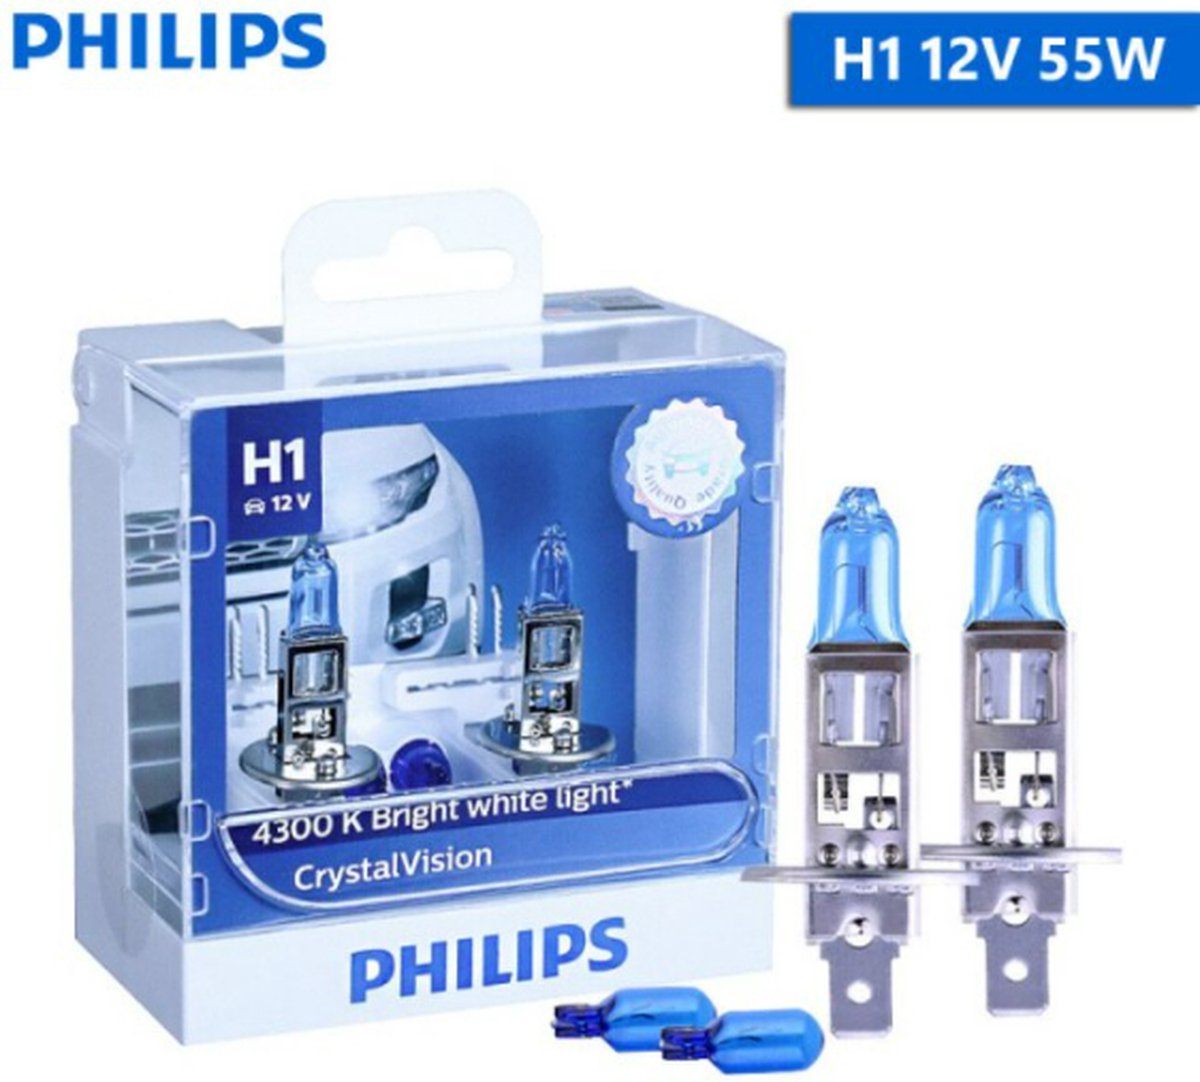 H1 55 Watt Philips Crystal Vision lampen 12V – Wit licht 4300K – Xenon look – LED look – Hoge lichtopbrengst – Lange levensduur – H1 55w Autolampen – Koplampen – Kleur wit – H.O.D. halogeen Origineel Philips lampen – 2 stuks – Gratis W5W stadslichten